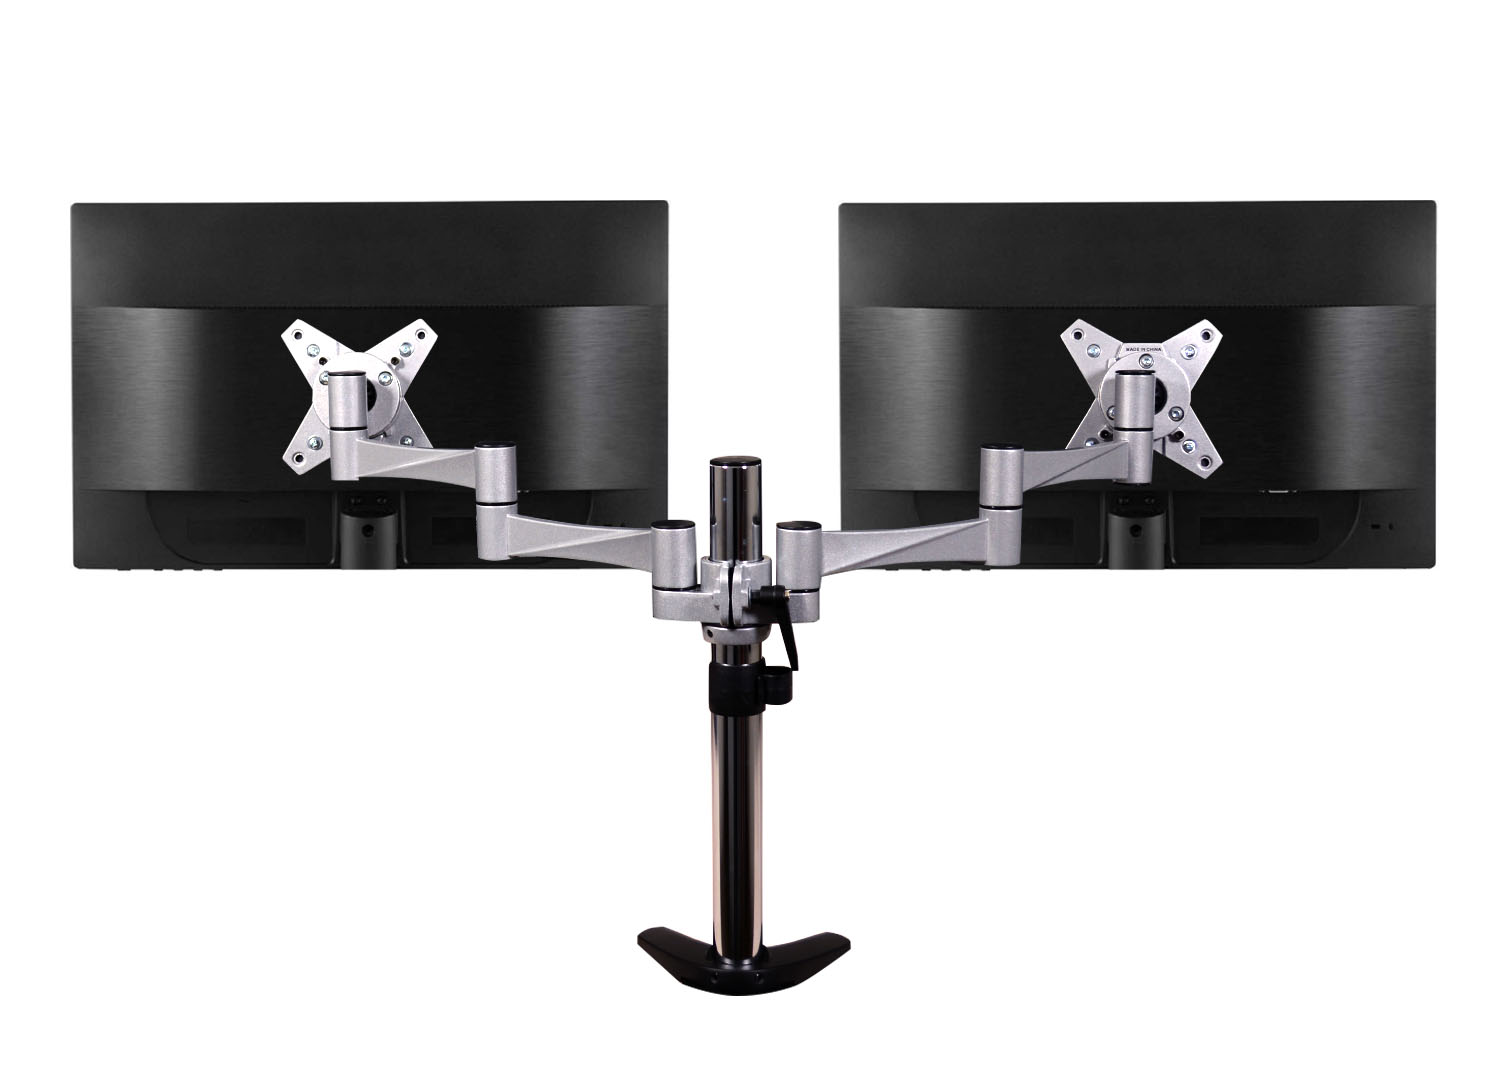 QualGear QG-DM-02-016 3 Way Articulating Dual Desk Mount for 13-27 Inches Flatpanel Monitors, Silver